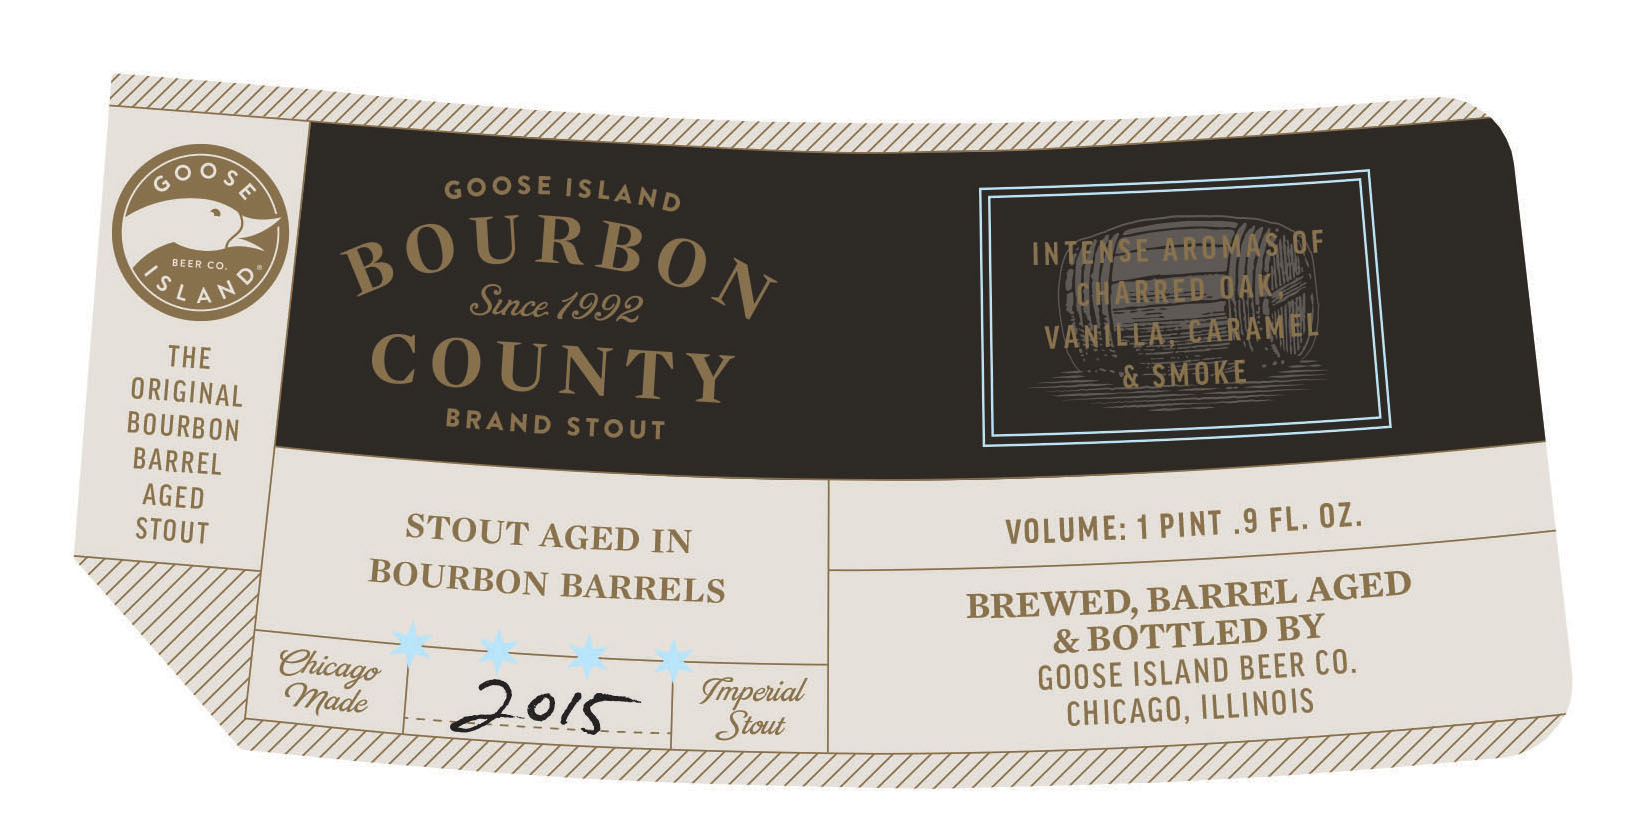 Goose Island Bourbon County Brand Stout